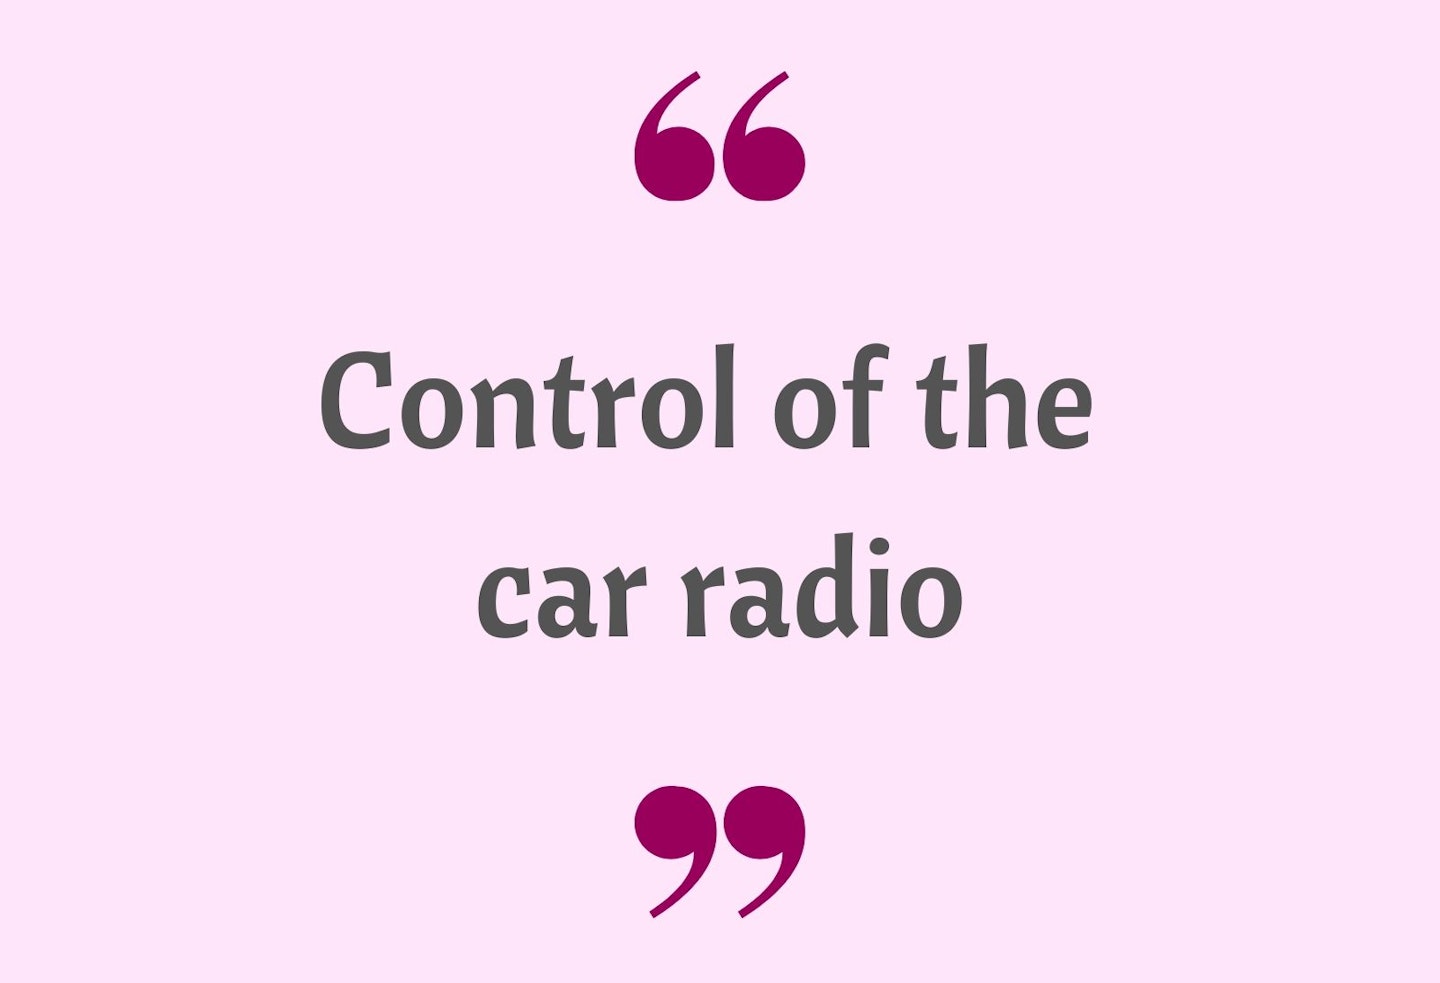 15) Control of the car radio